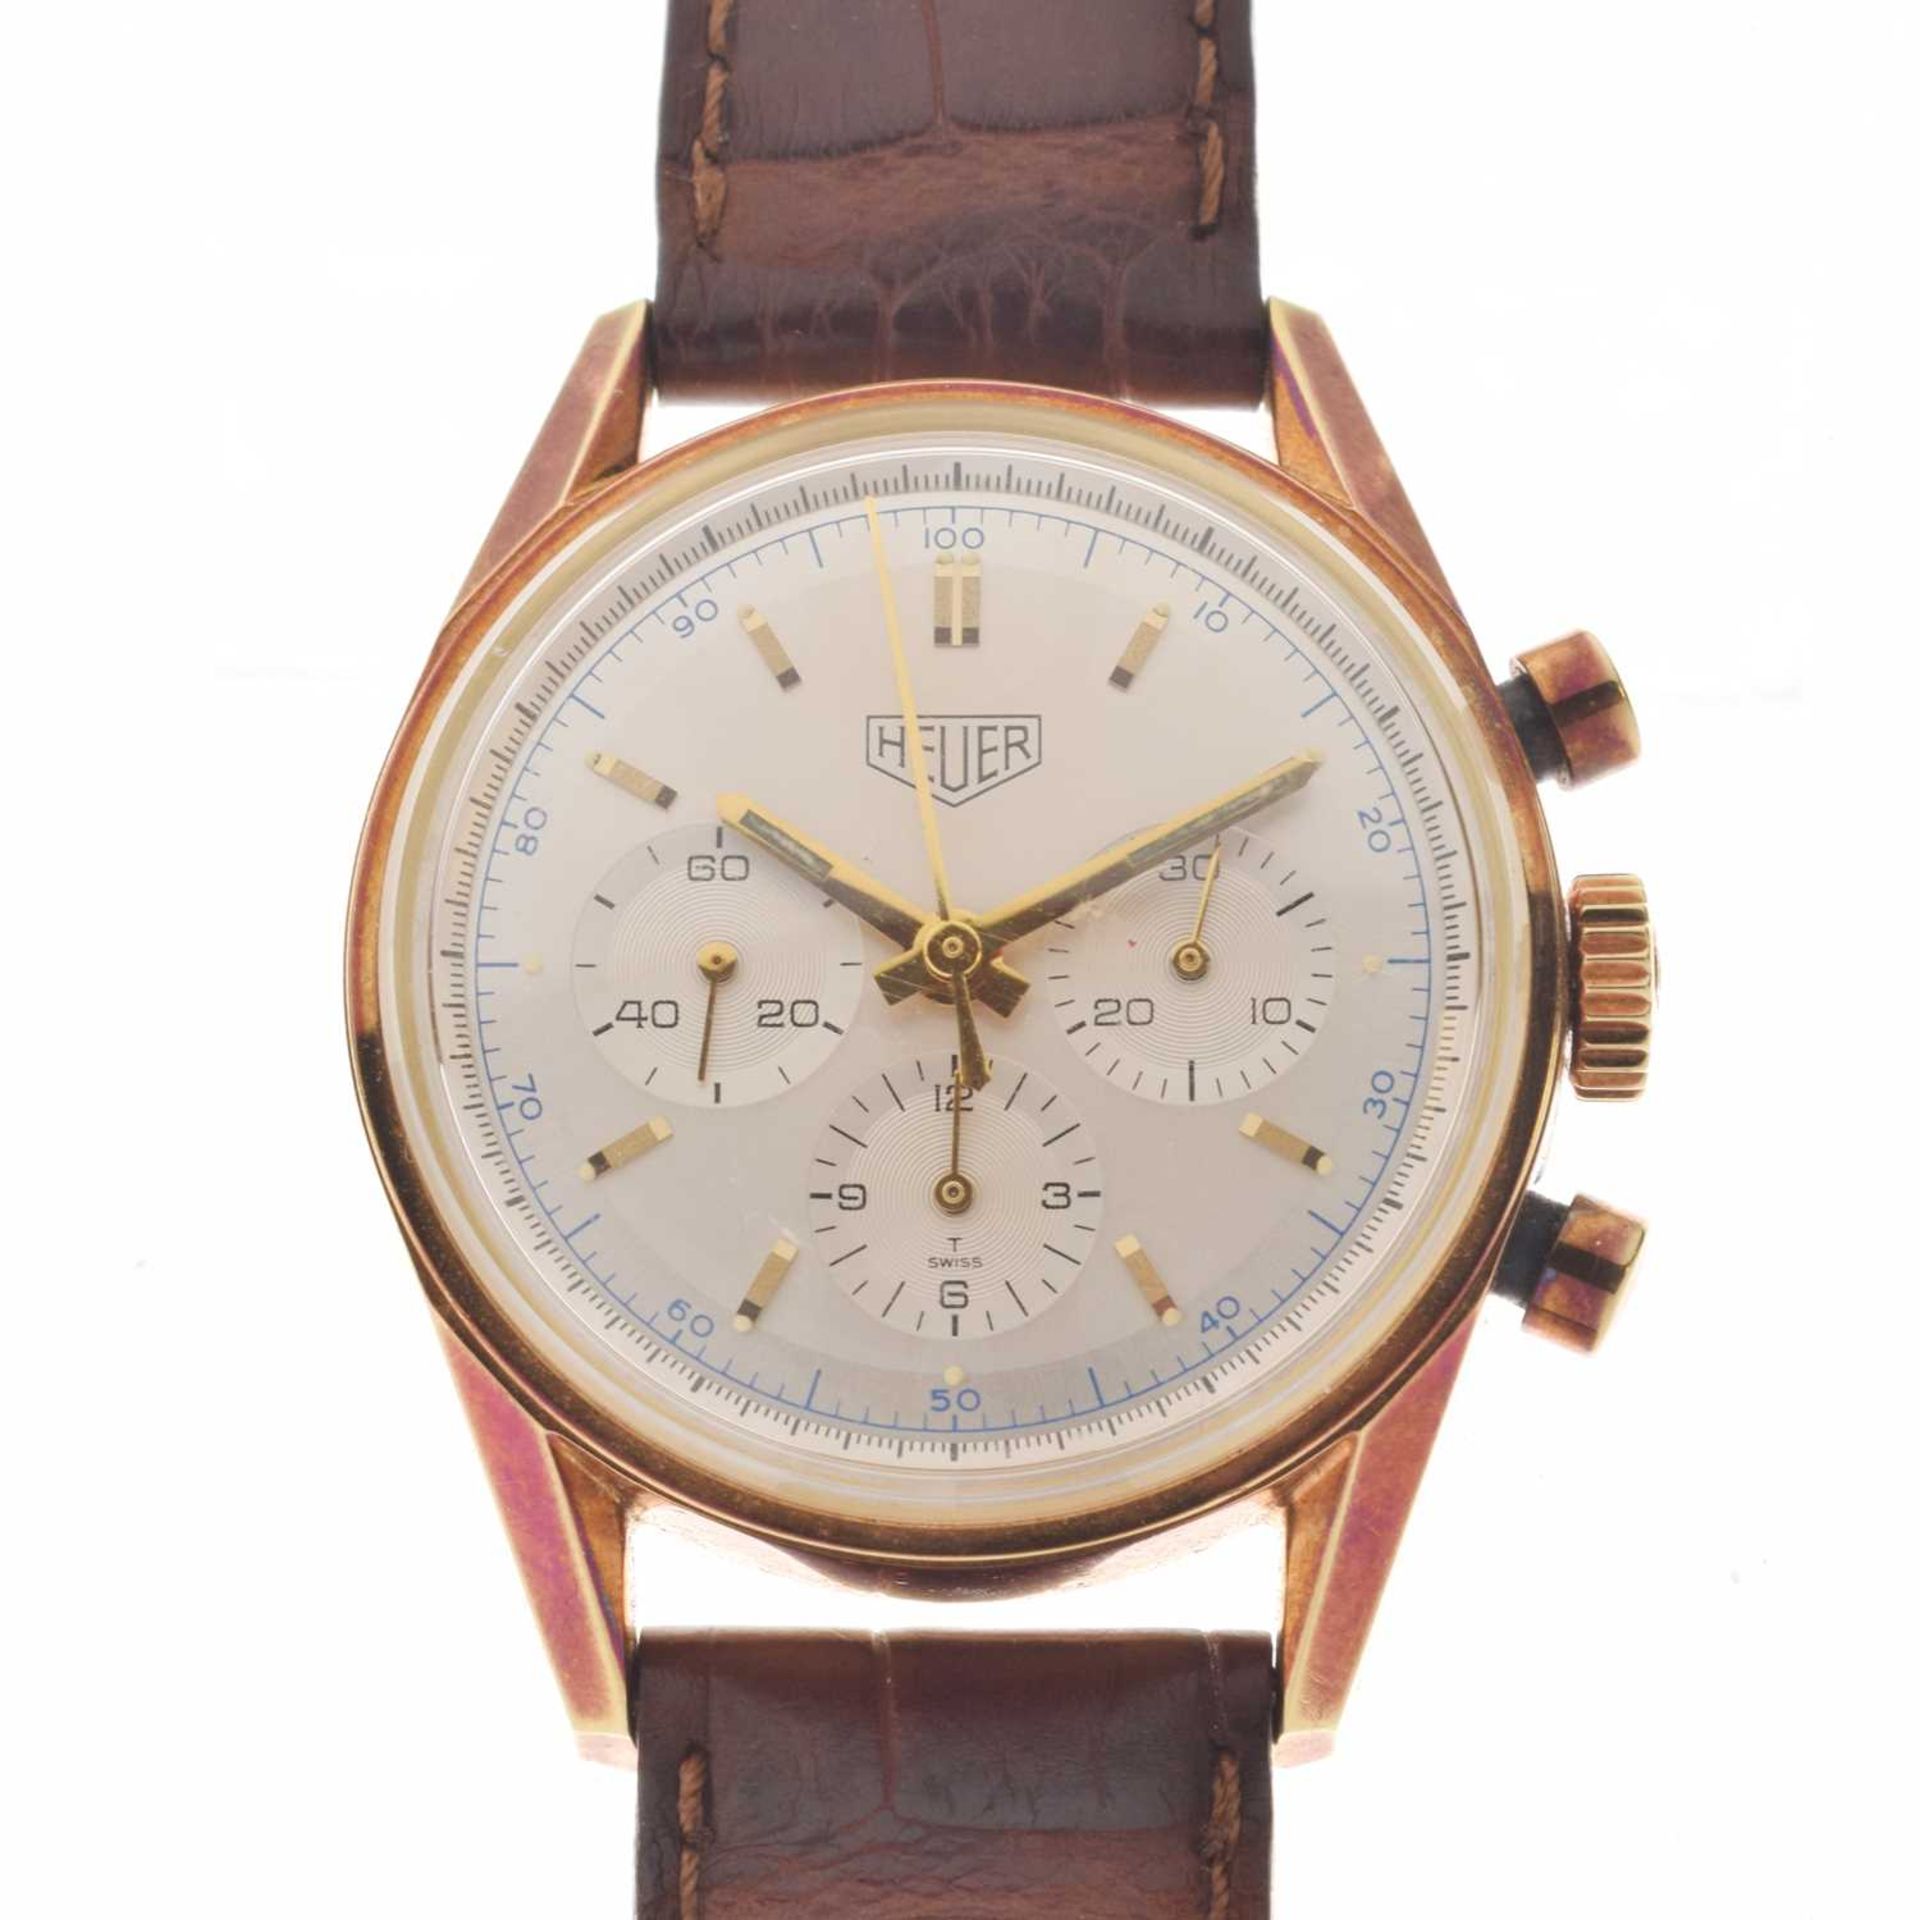 Heuer Carrera - Gentleman's chronograph 18K cased limited edition wristwatch